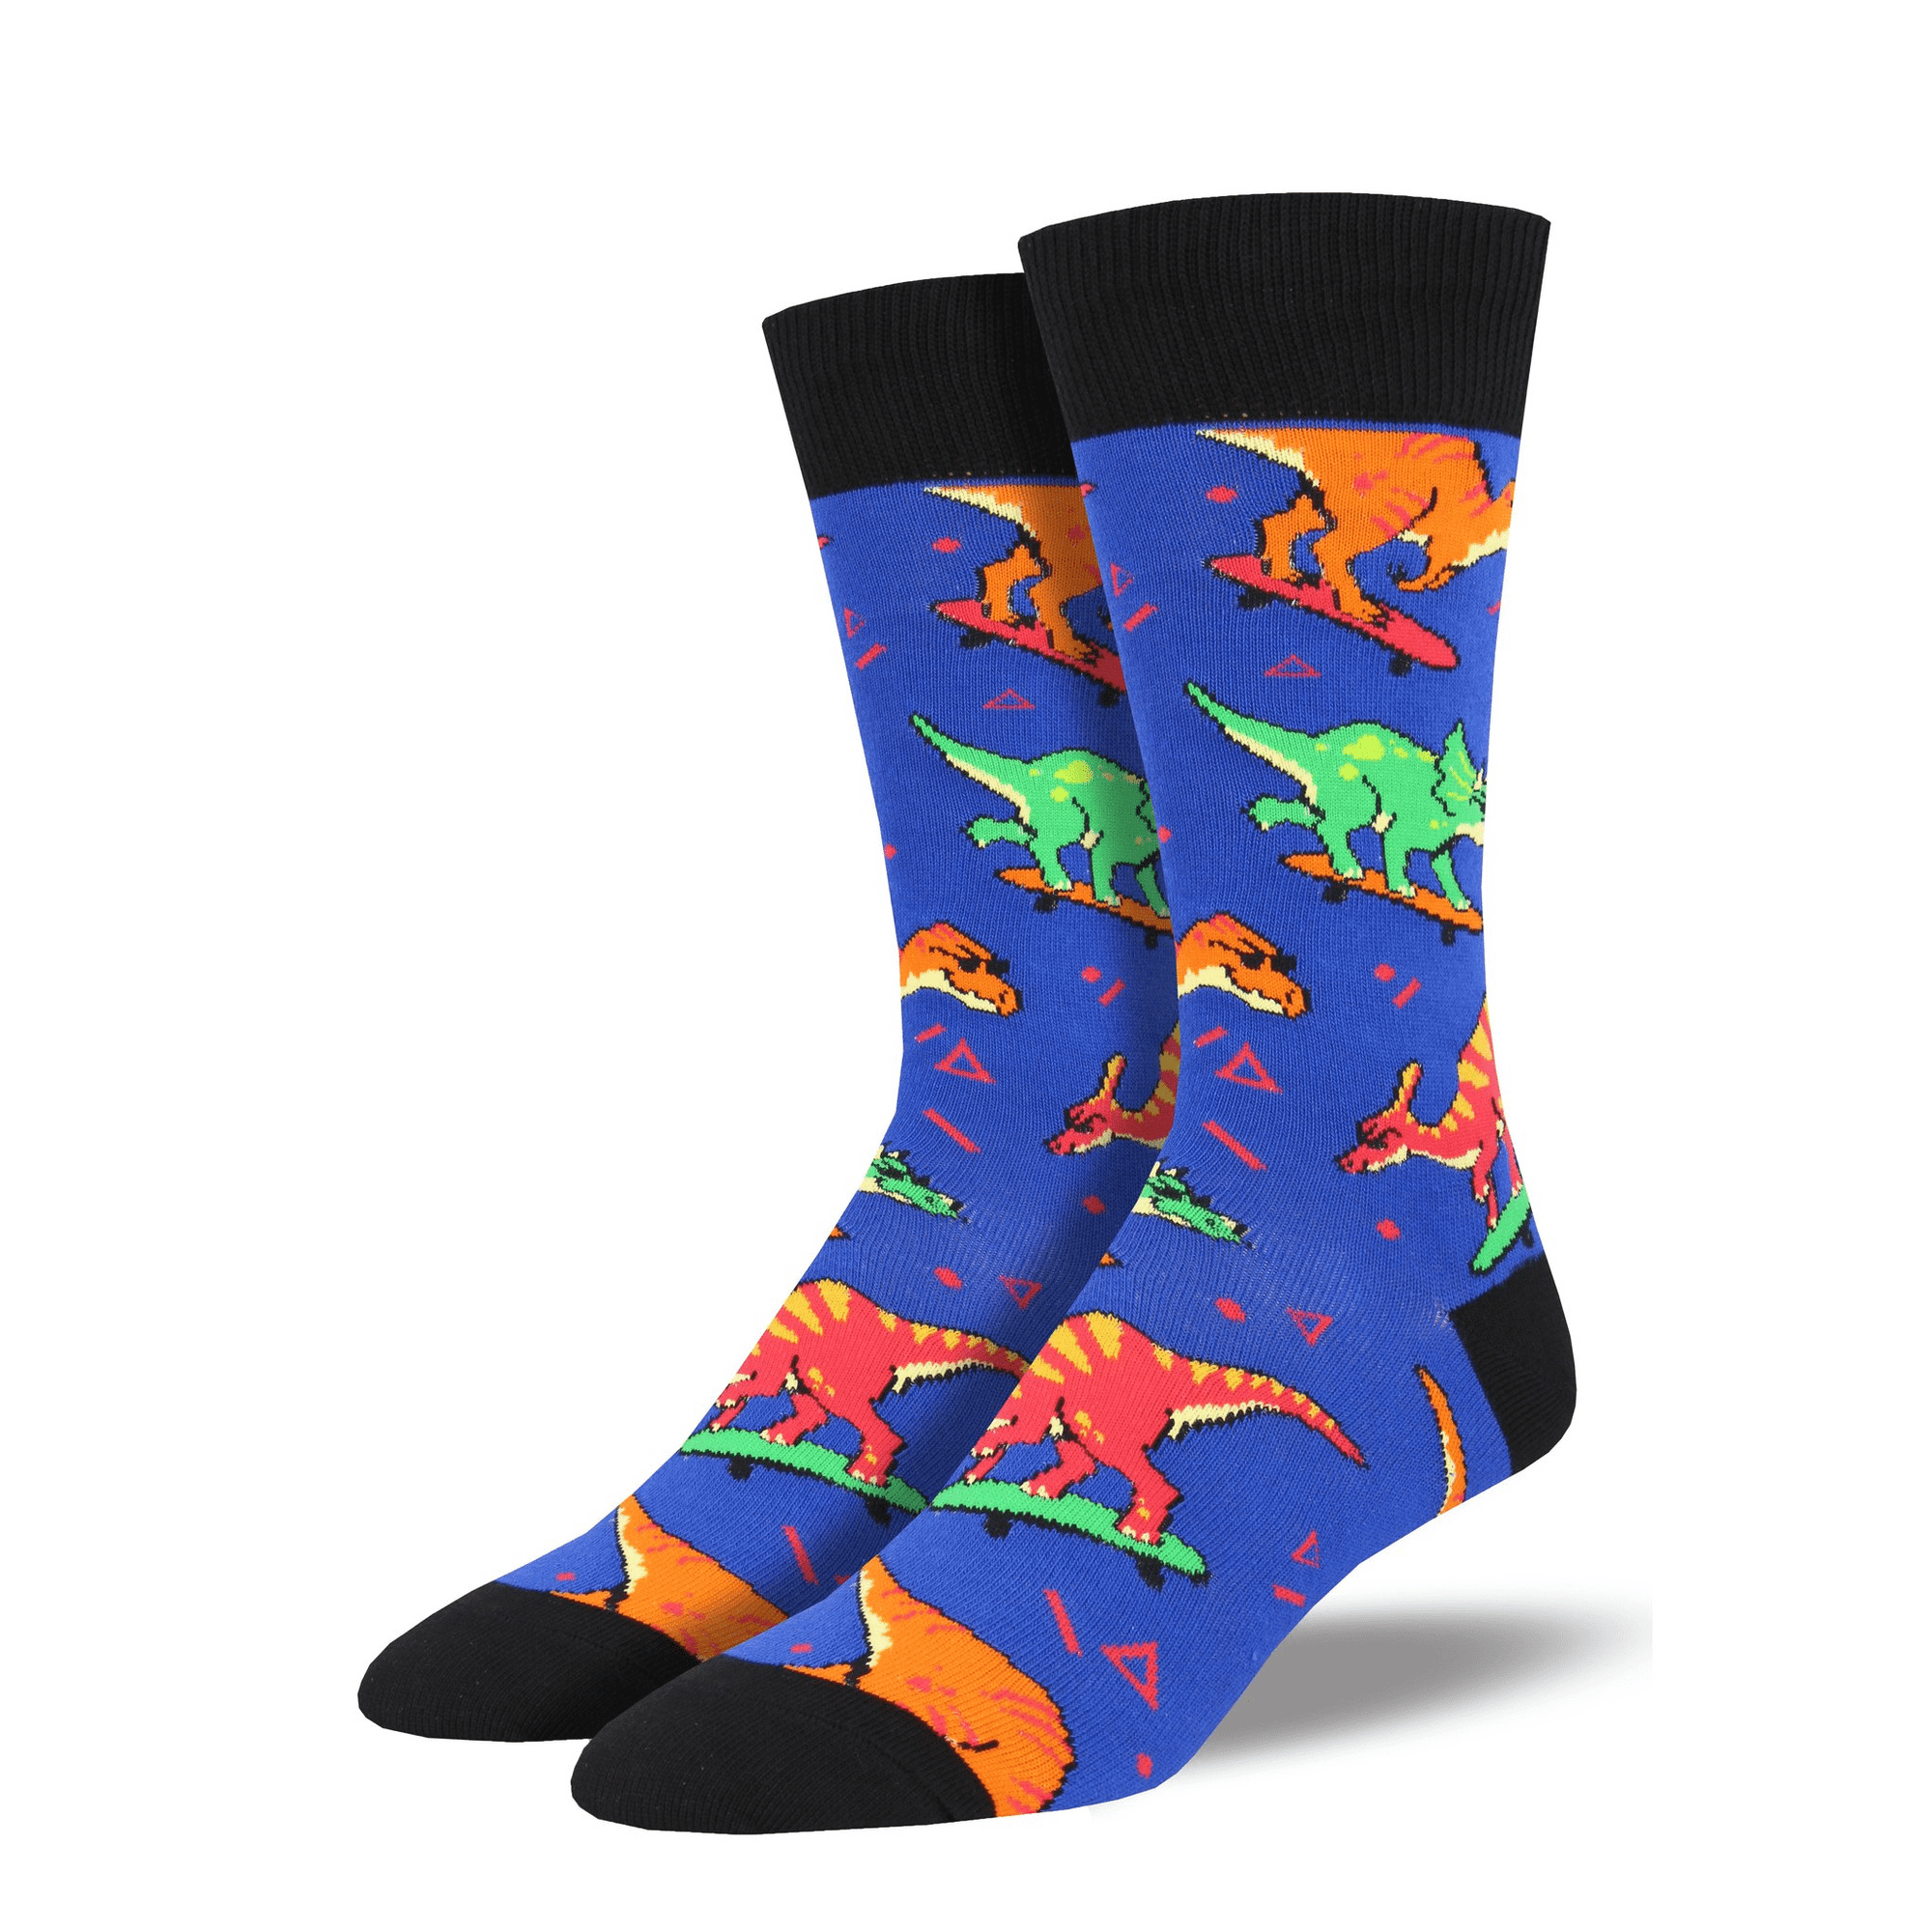 Skate or Dinosaur socks - blue - mens Sock Smith Clothing/Accessories